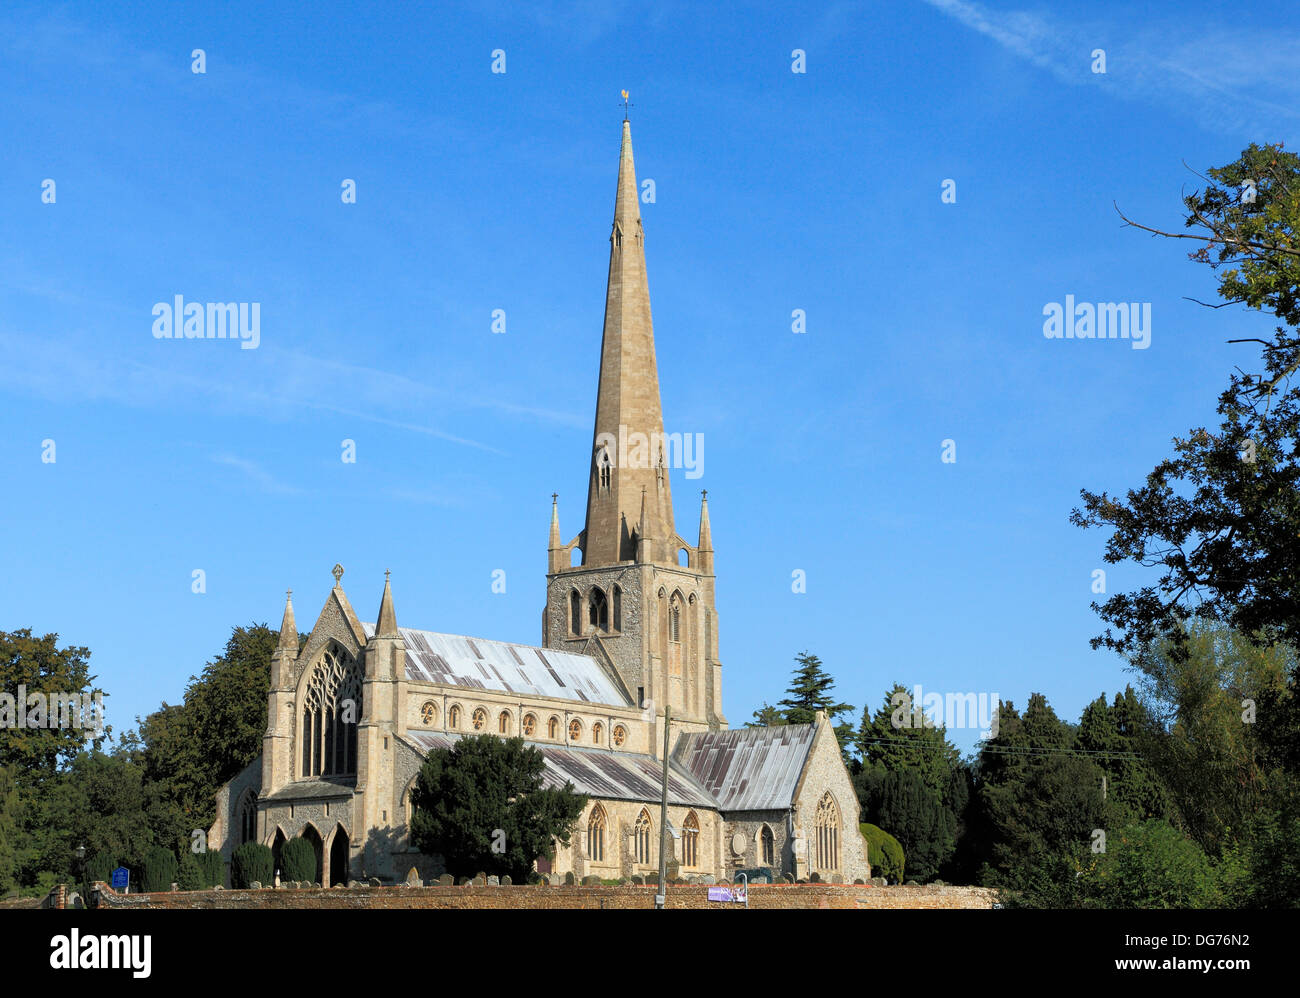 Snettisham, Norfolk, parish church with spire English medieval village churches spires England UK Stock Photo